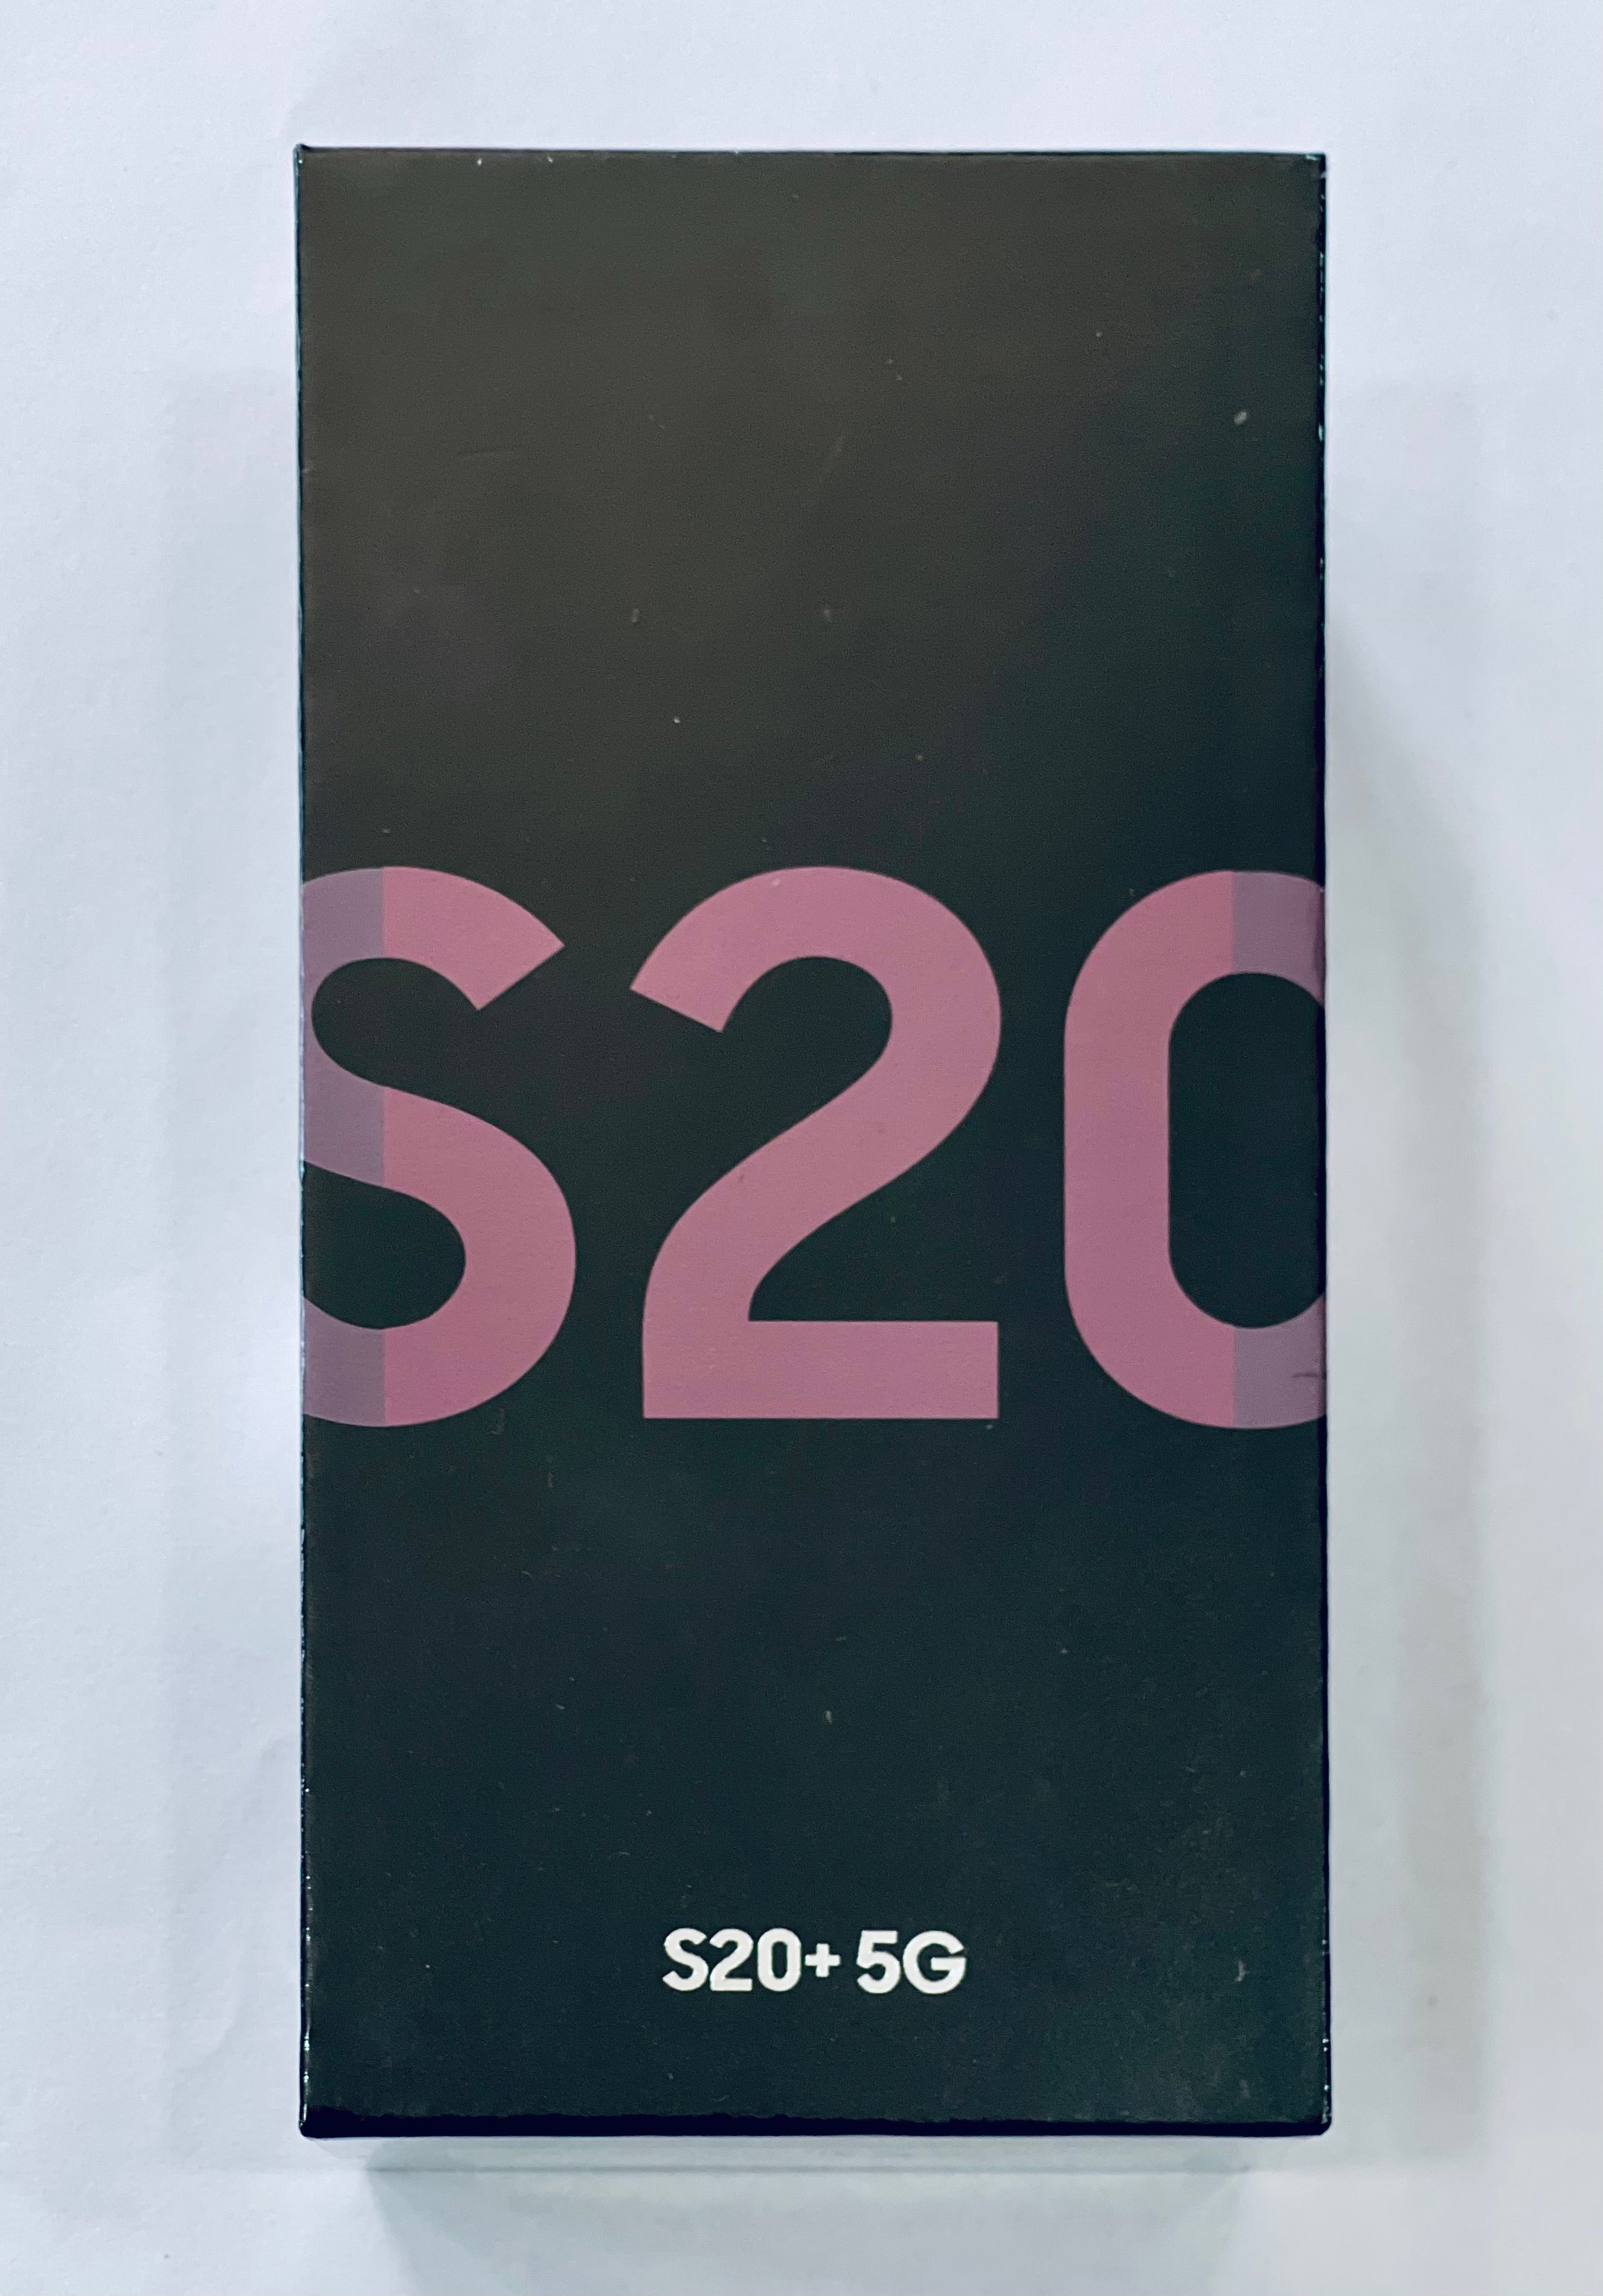 Samsung S20 Plus Factory Unlock (All Colors)